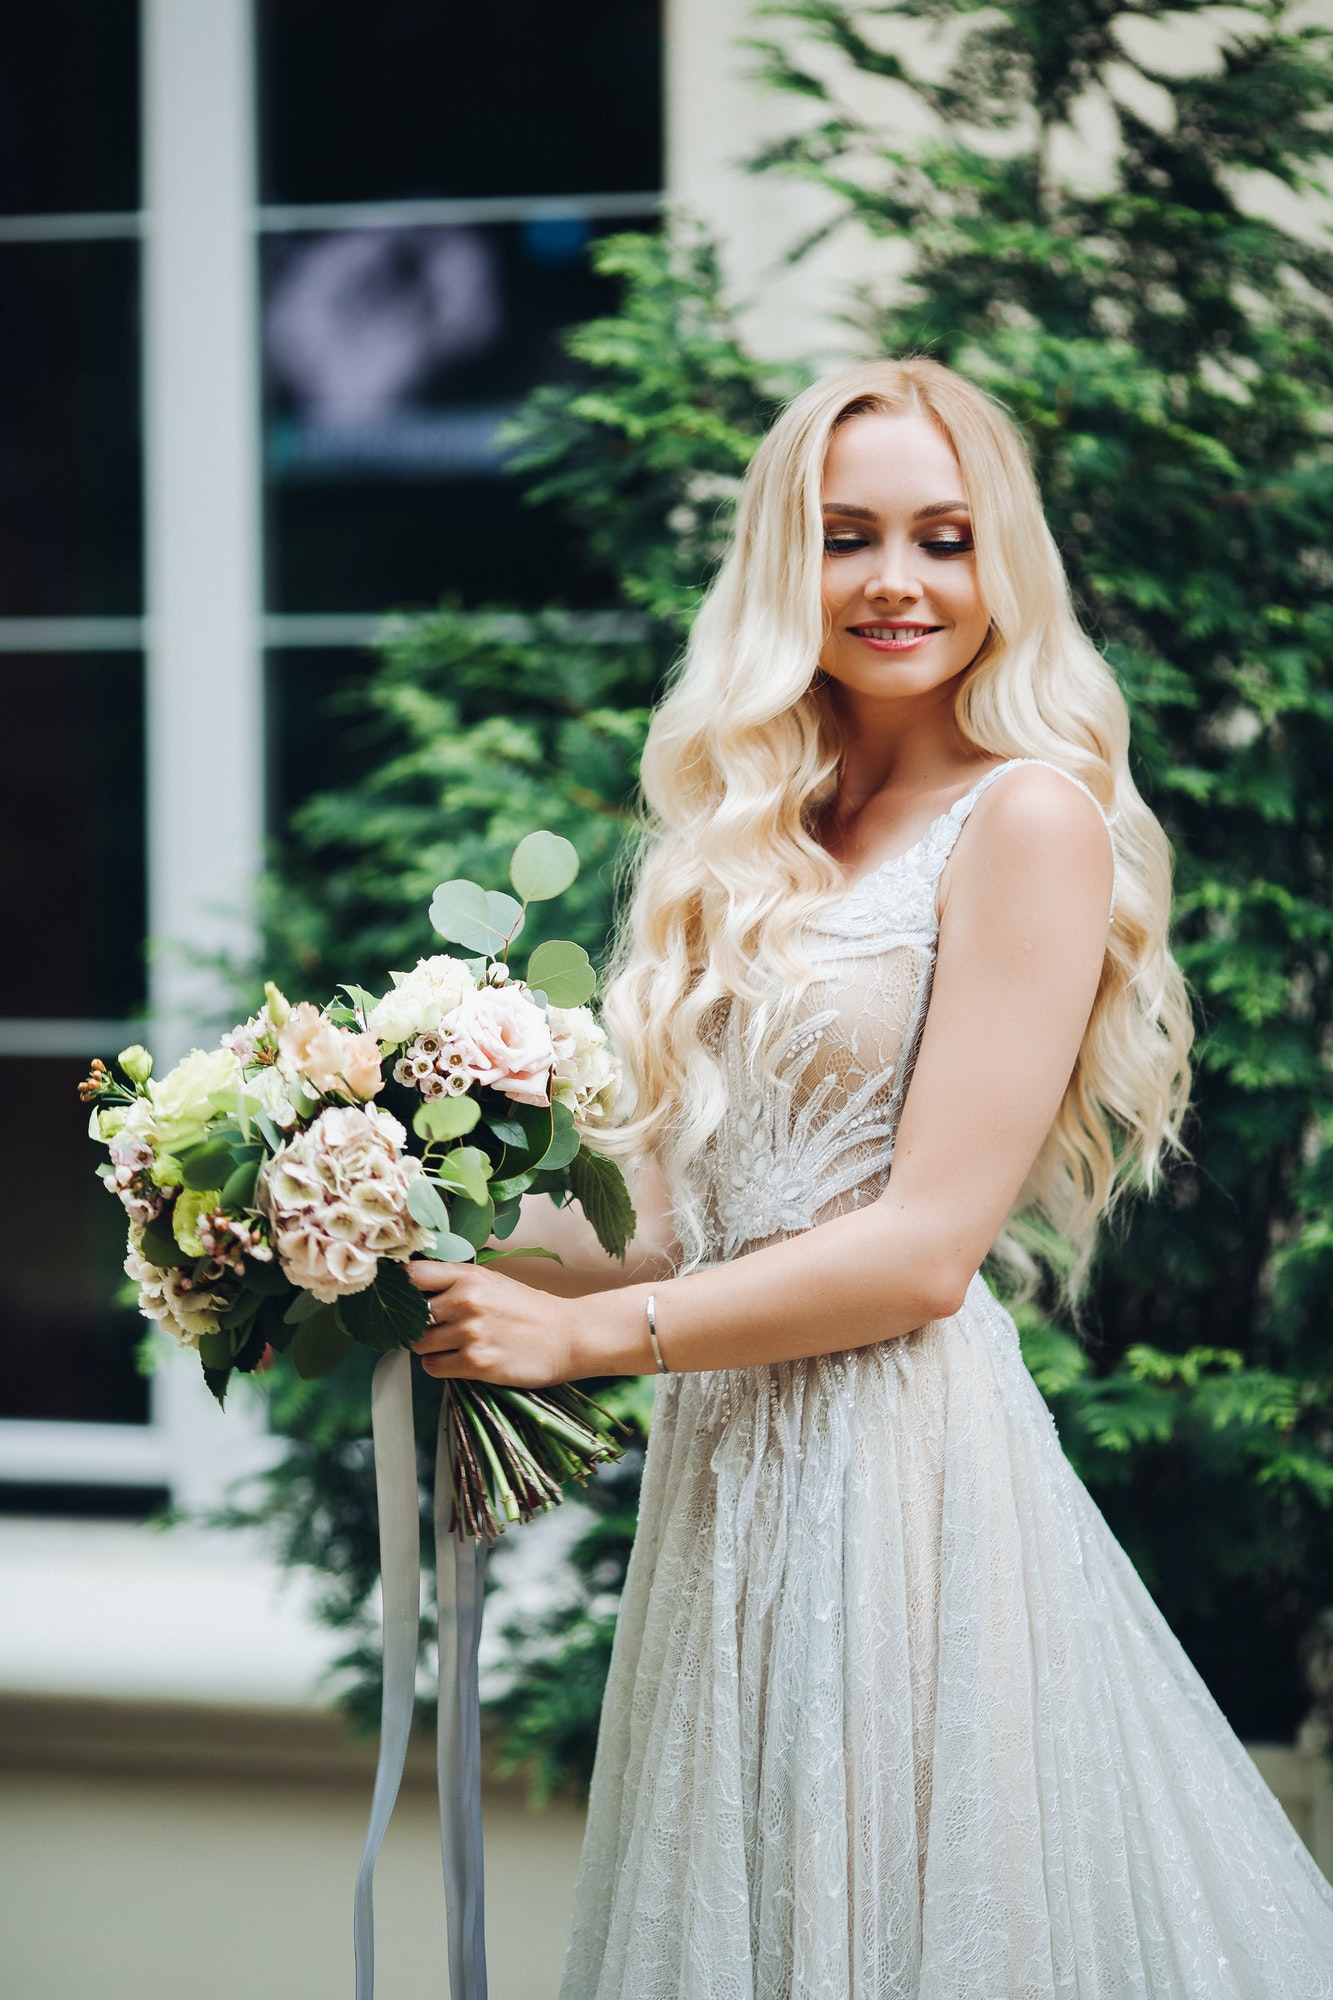 Elegant blondie bride smiling, holding wedding boquet.